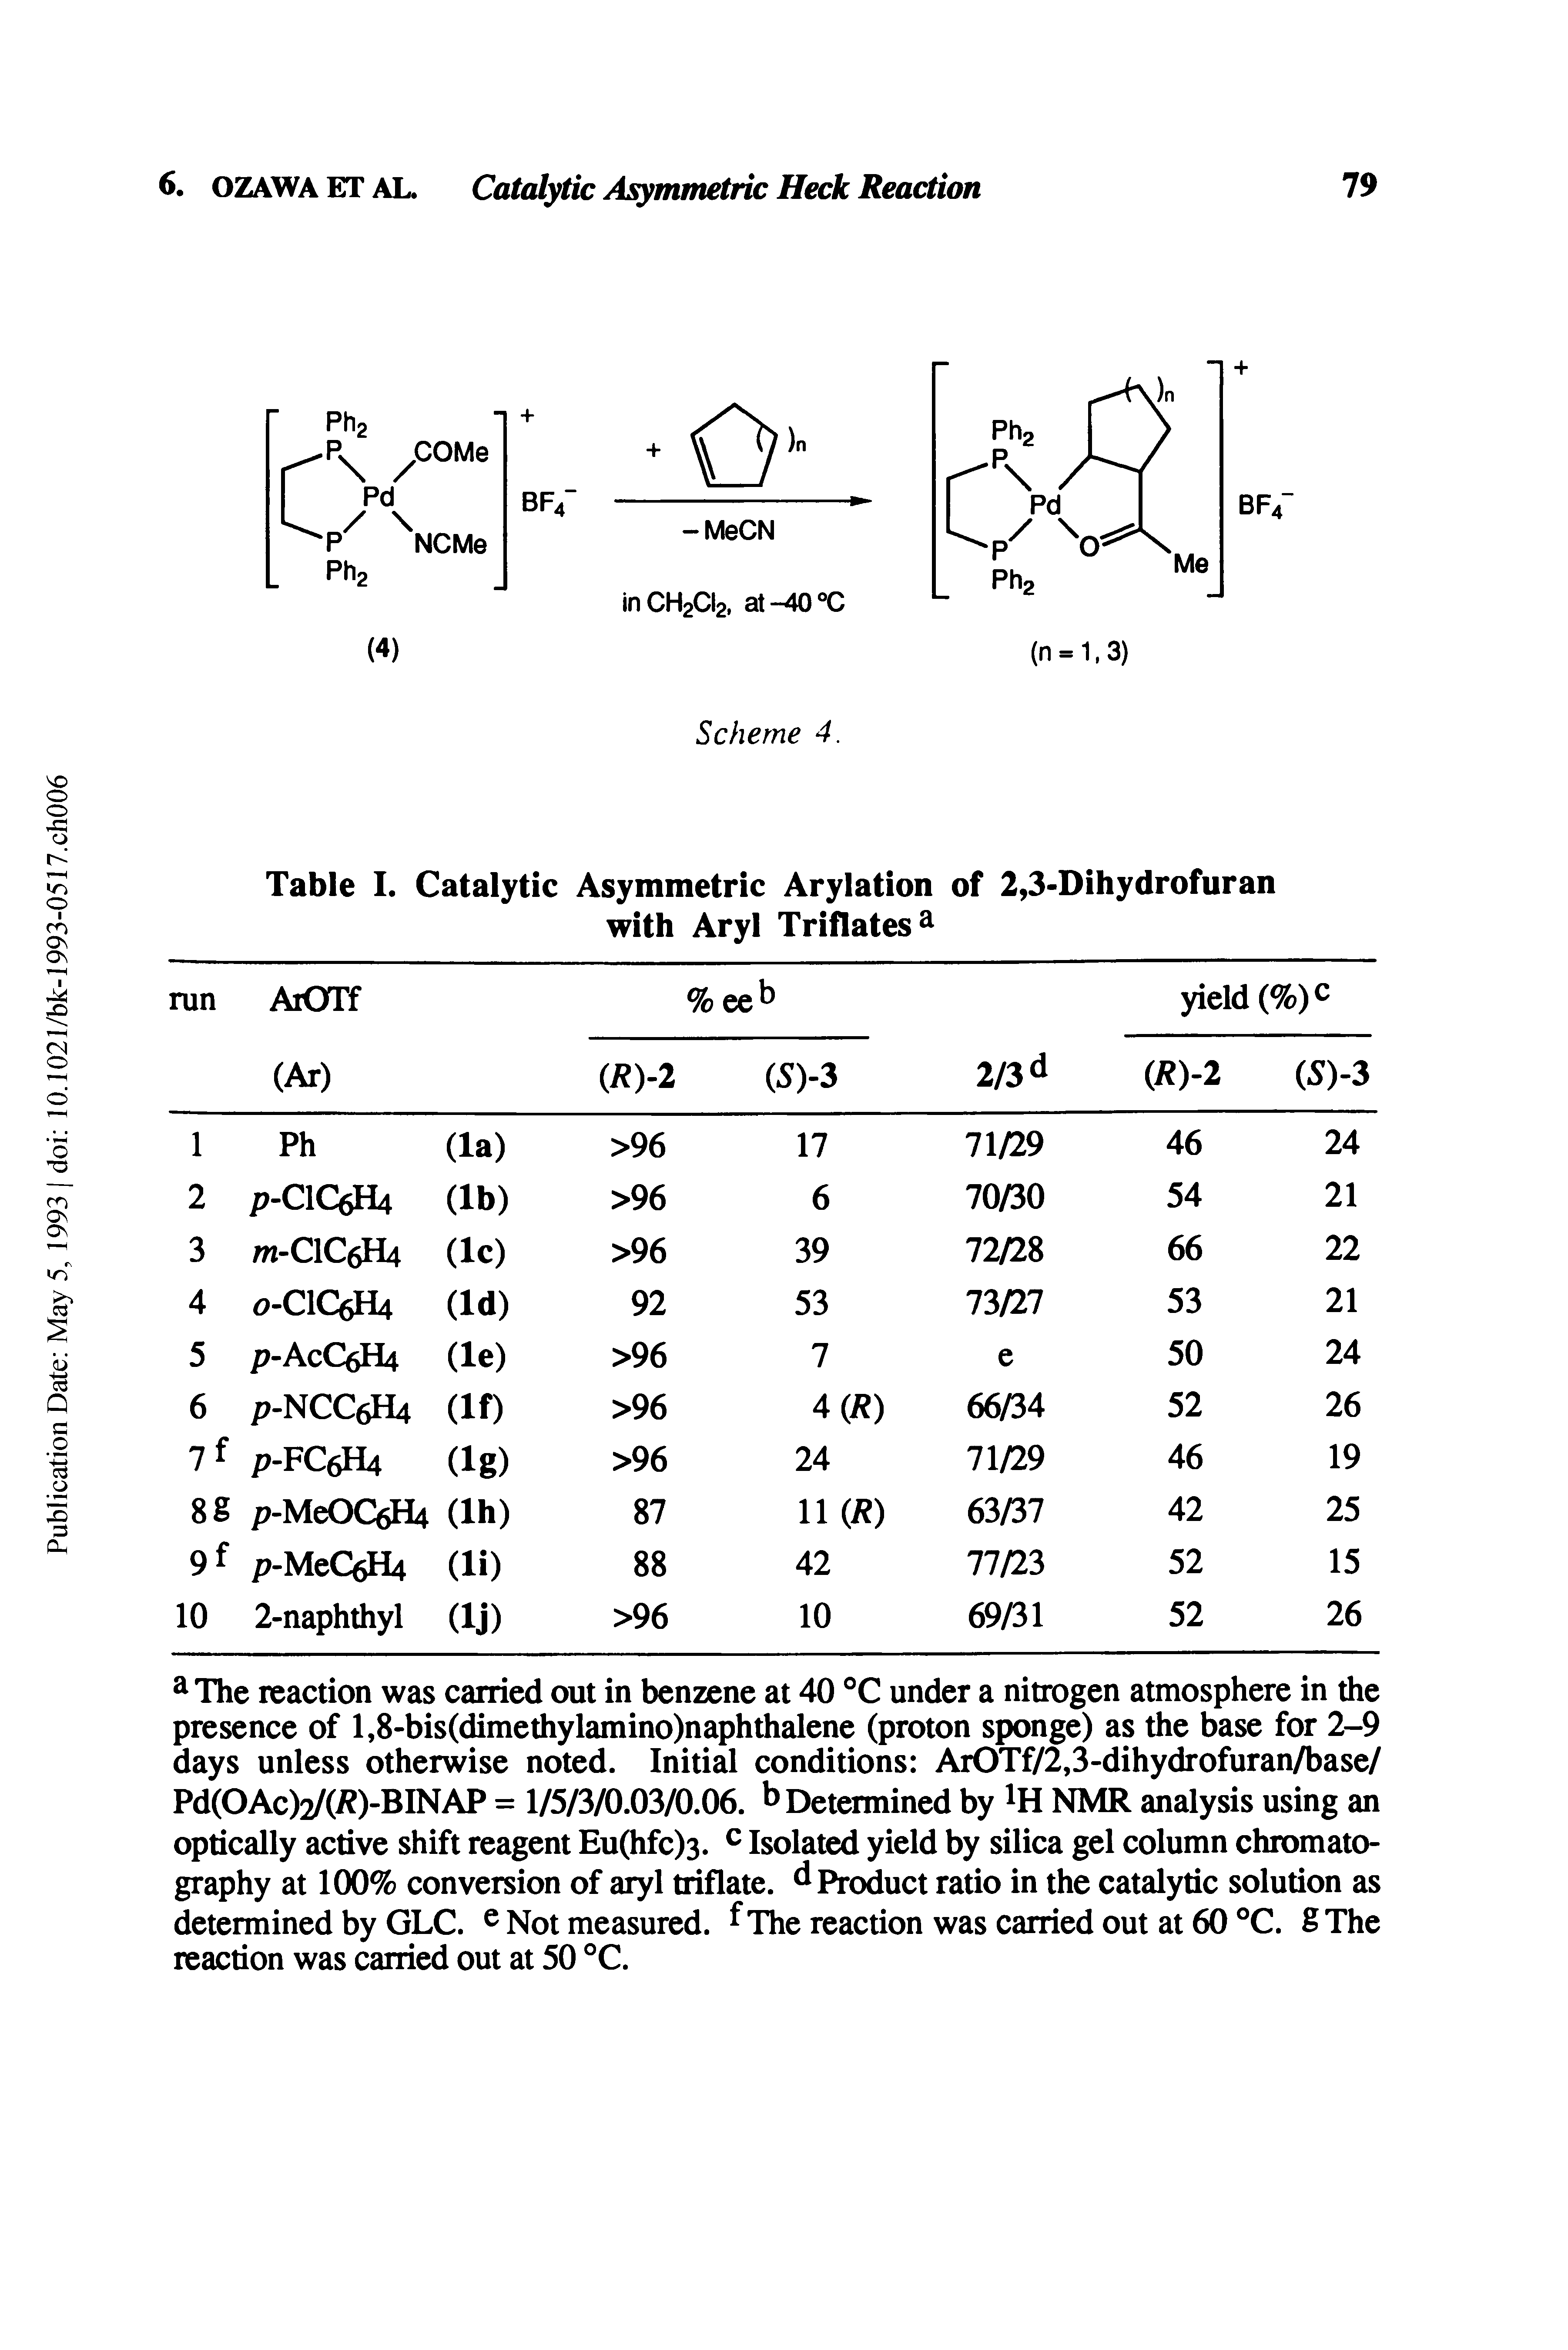 Table I. Catalytic Asymmetric Arylation of 2,3-Dihydrofuran with Aryl Triflatesa...